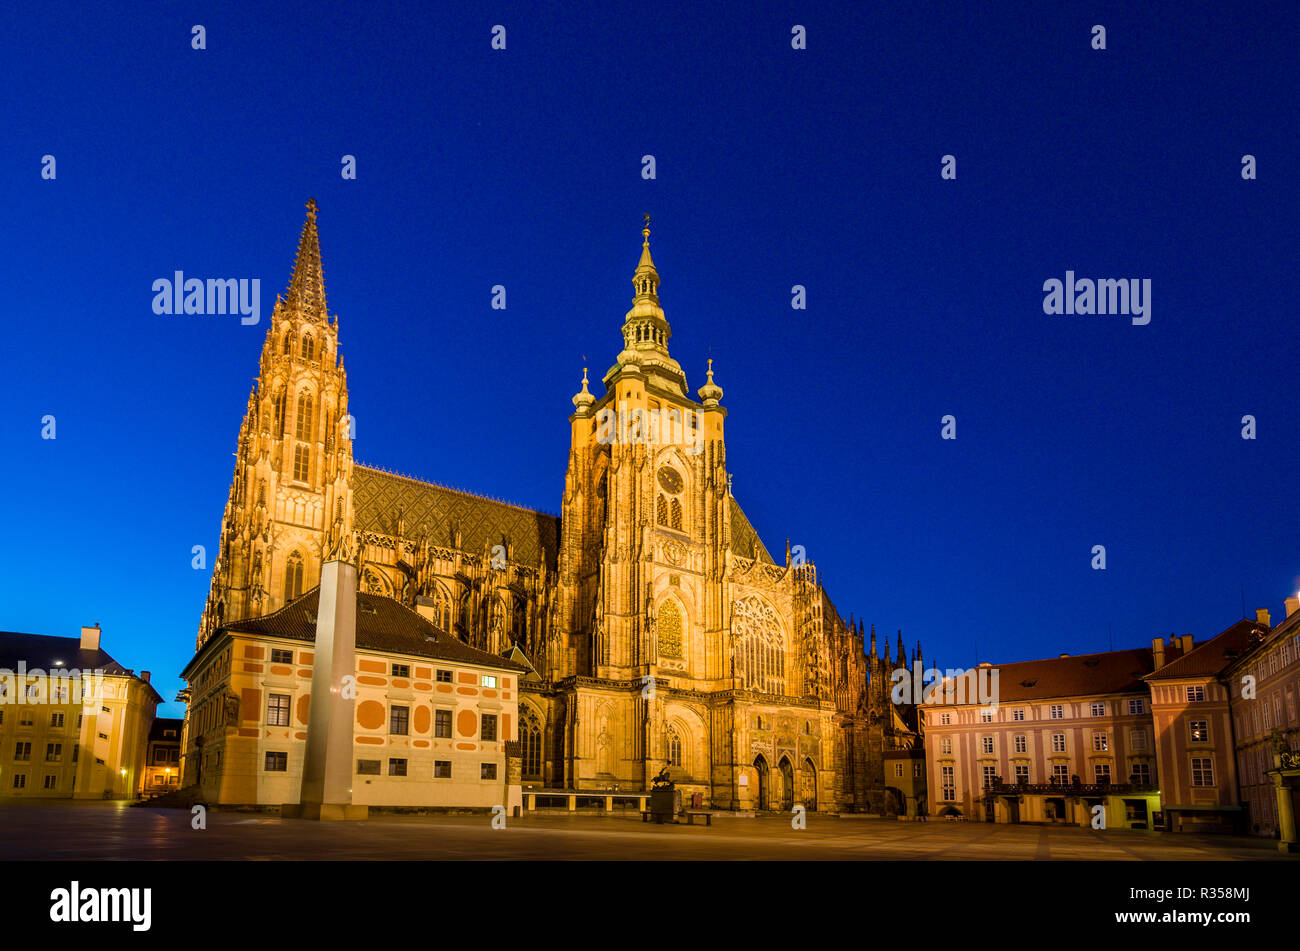 'Katedrála svatého Víta', Saint Vitus' Cathedral, at the main square of the 'Hradčany', the Castle District, at night Stock Photo